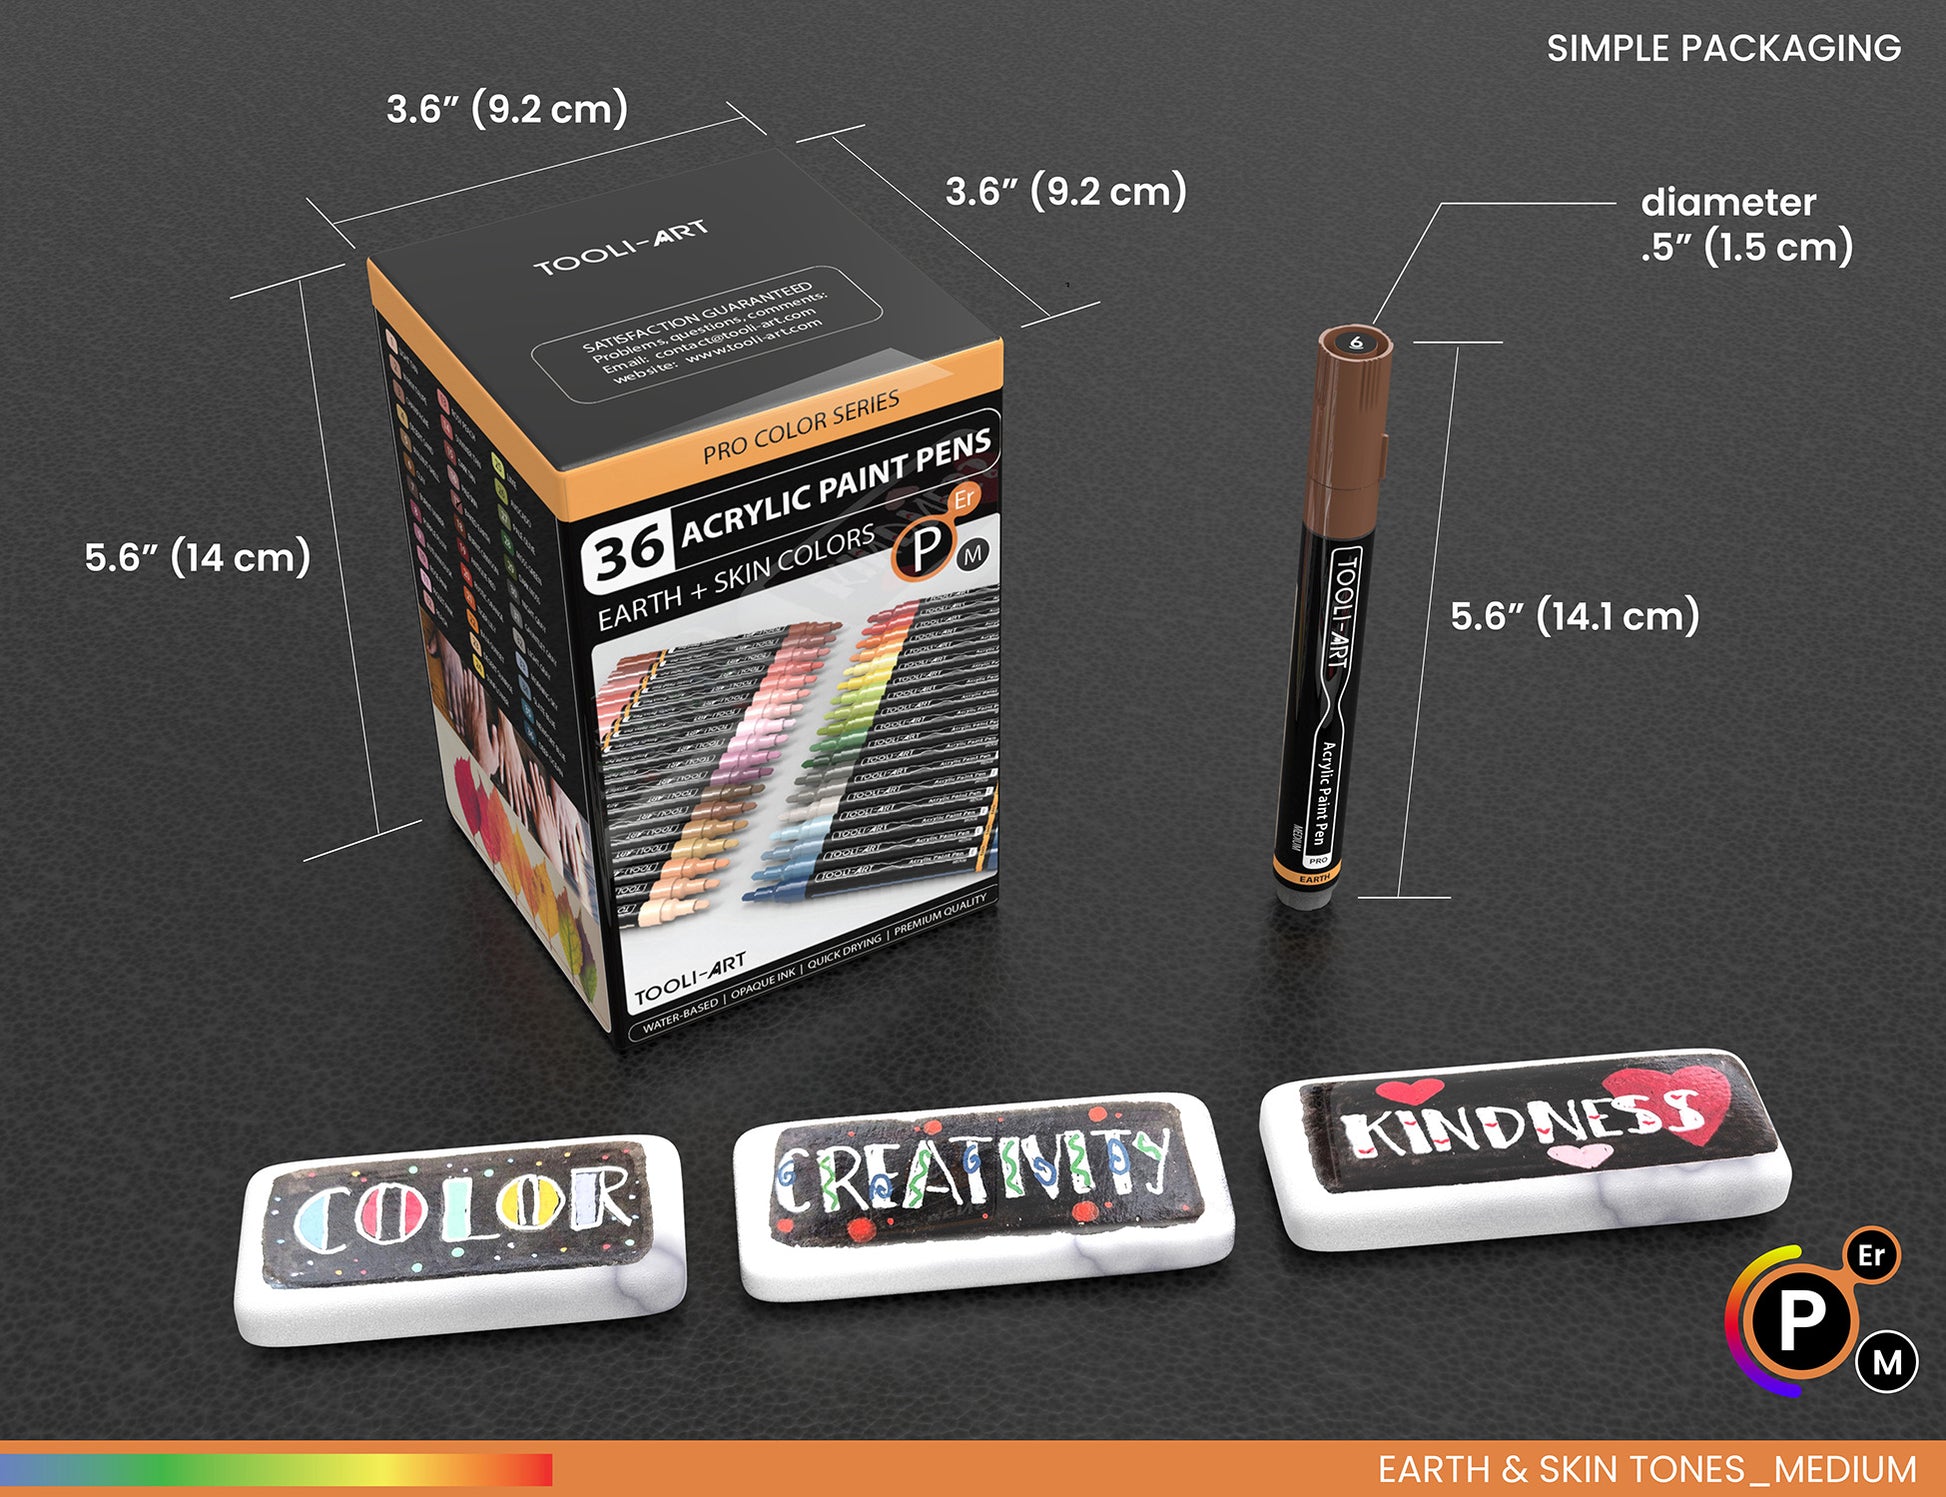 Tooli-art 24 Neon Fluorescent Acrylic Paint Pens Marker Set 0.7mm EXTRA  FINE 3.0mm Medium 